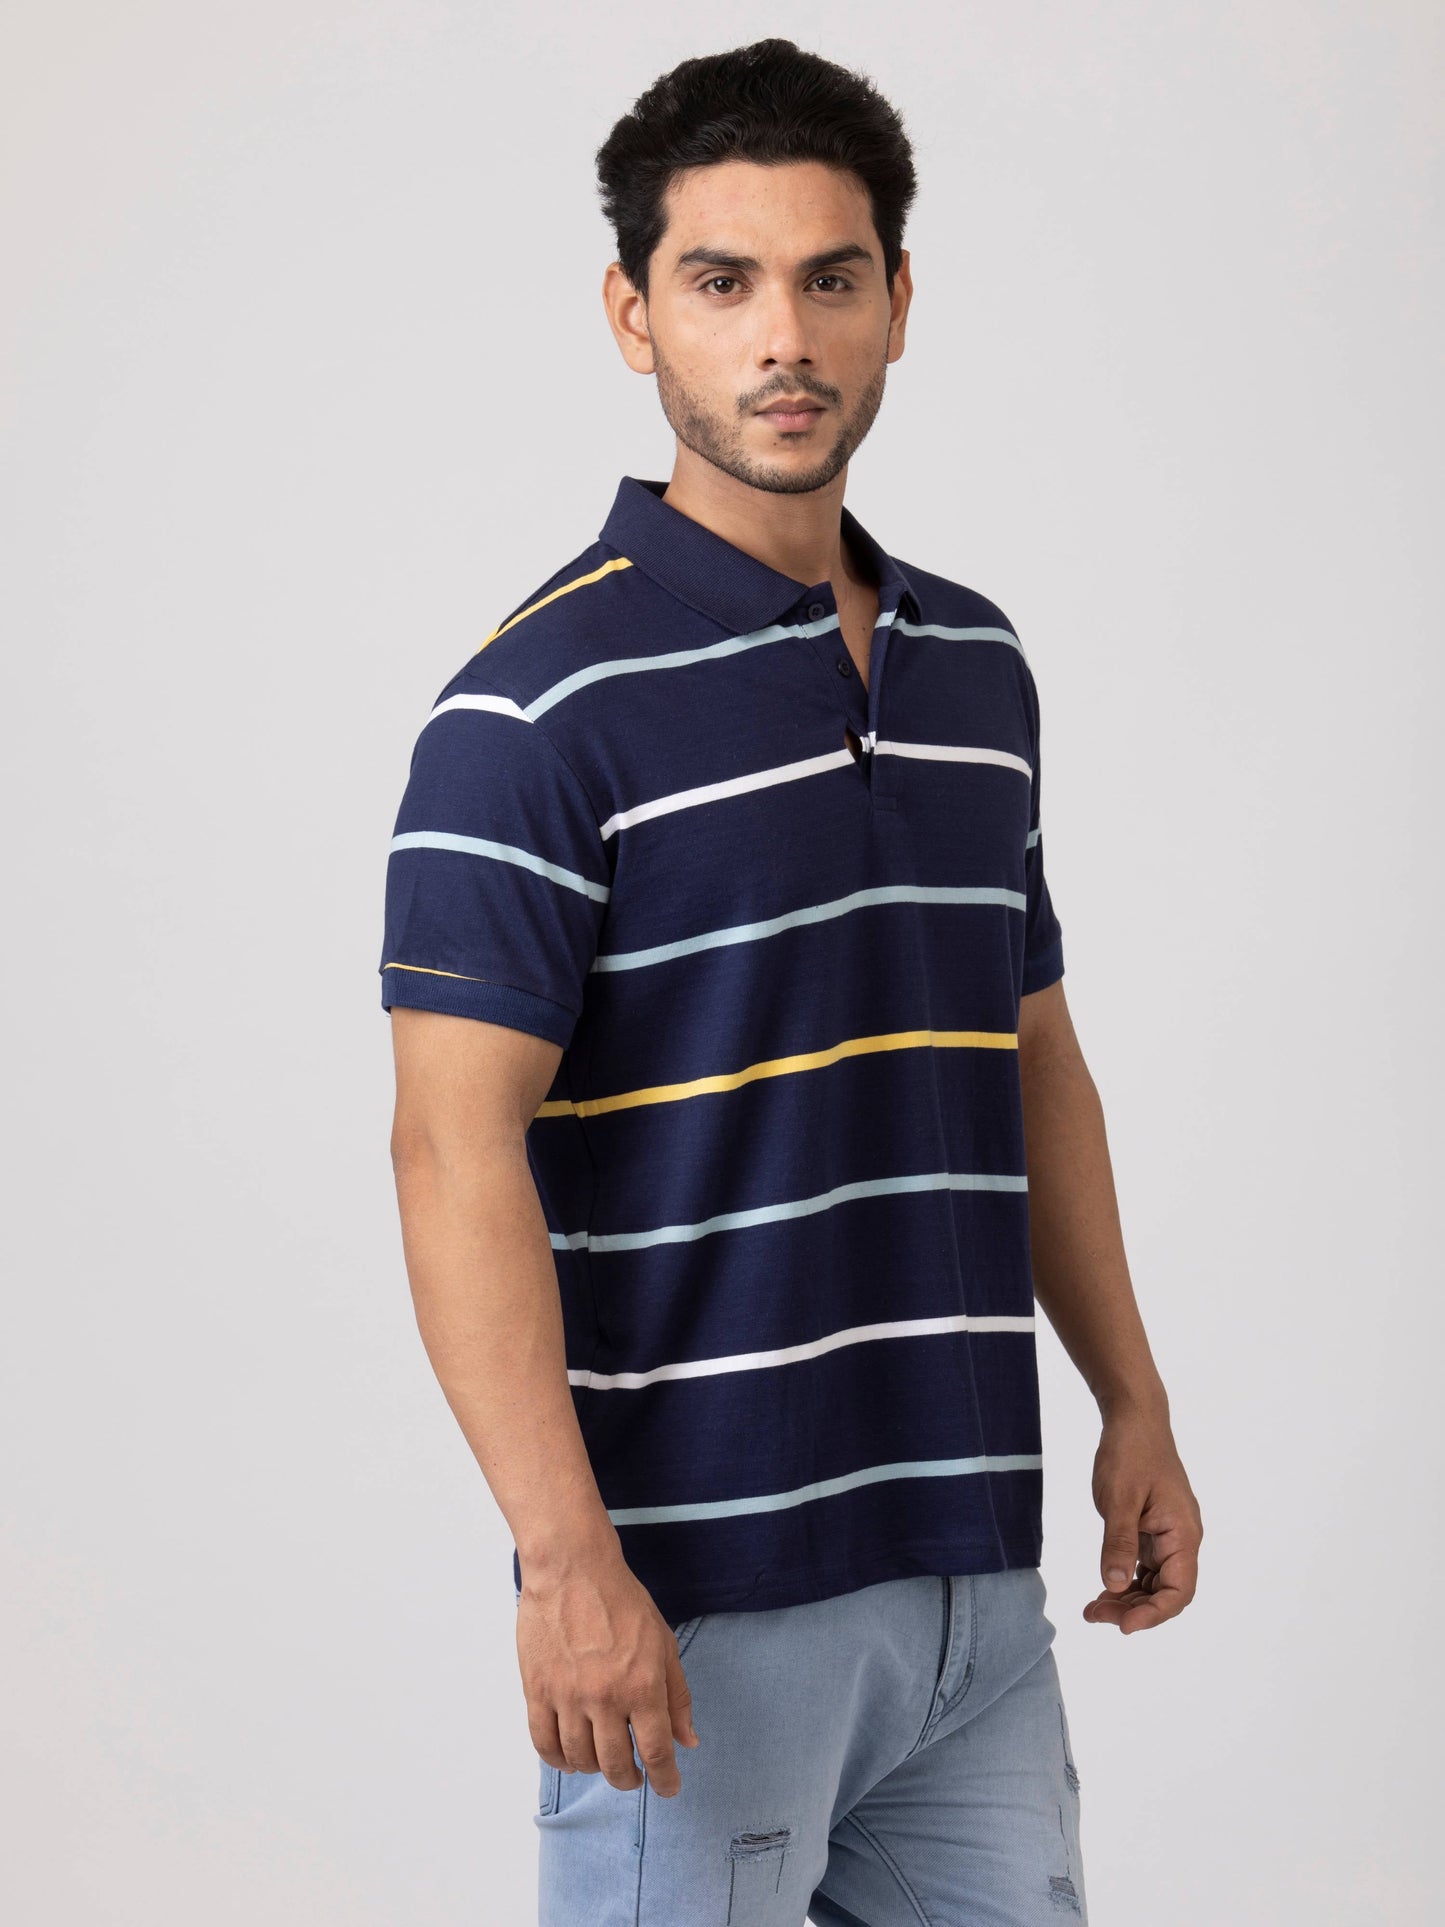 Stripe Vibe Modern & Comfortable 100% Cotton Mens Collar T-Shirt